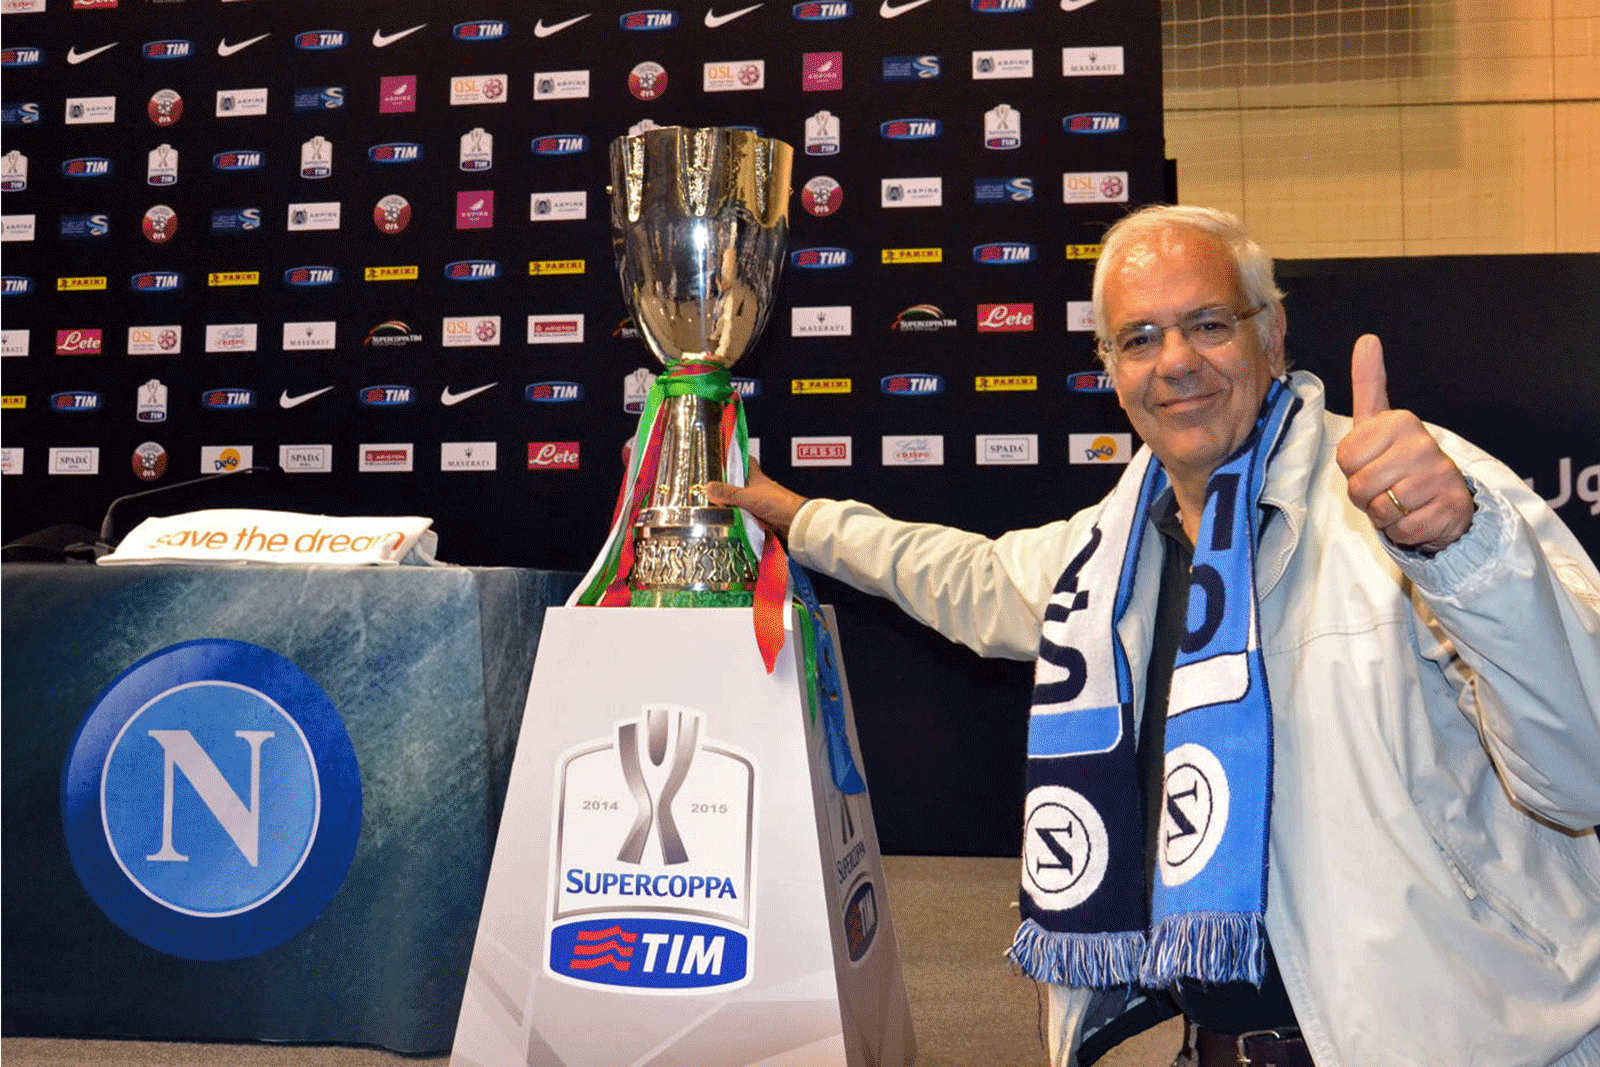 Napoli Winner of Supercoppa, 22 December 2014